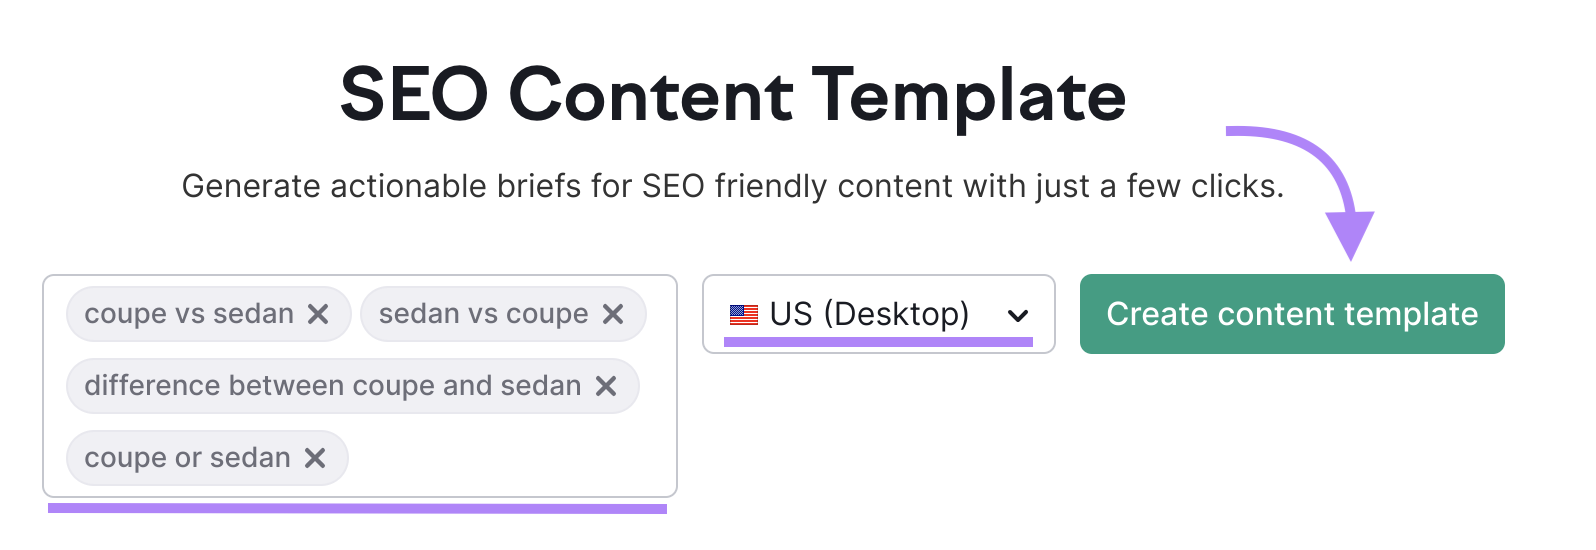 Semrush’s SEO Content Template tool